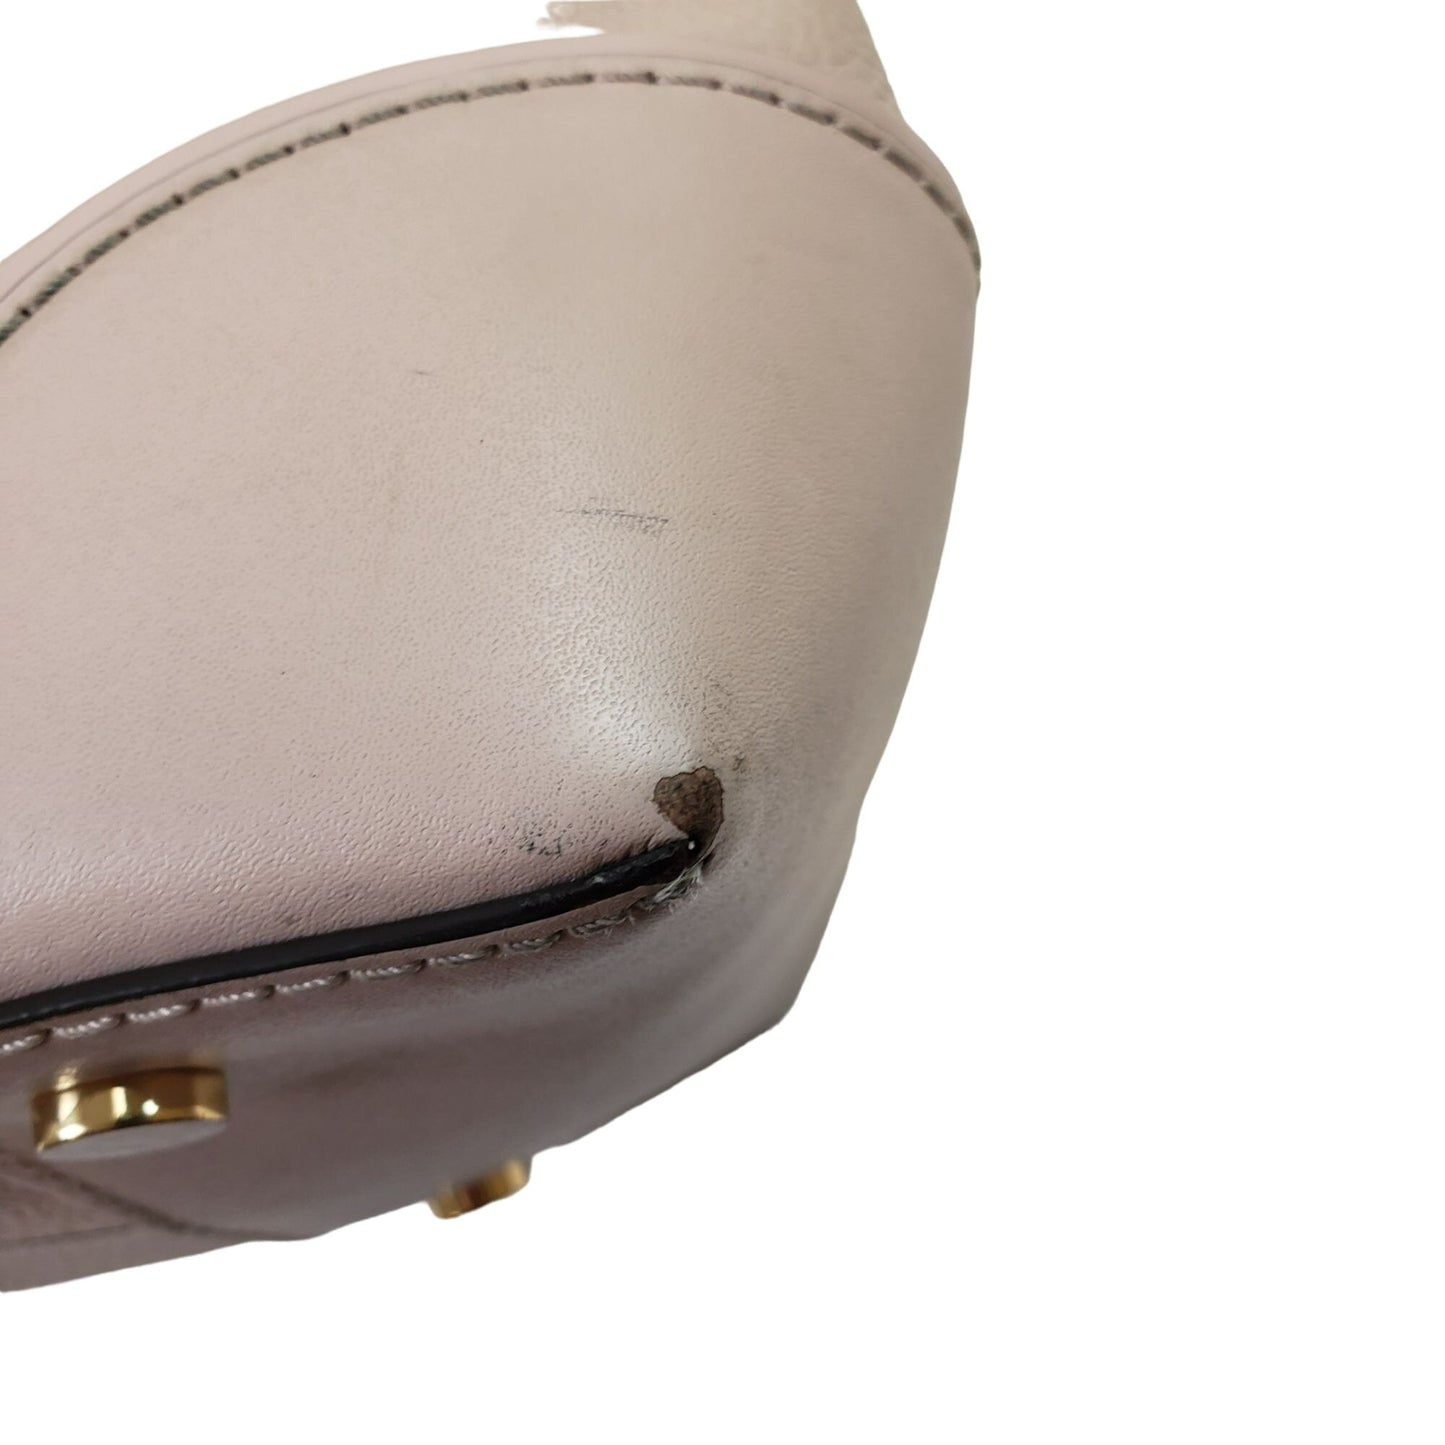 Michael Kors Pebble Leather Convertible Crossbody Handbag